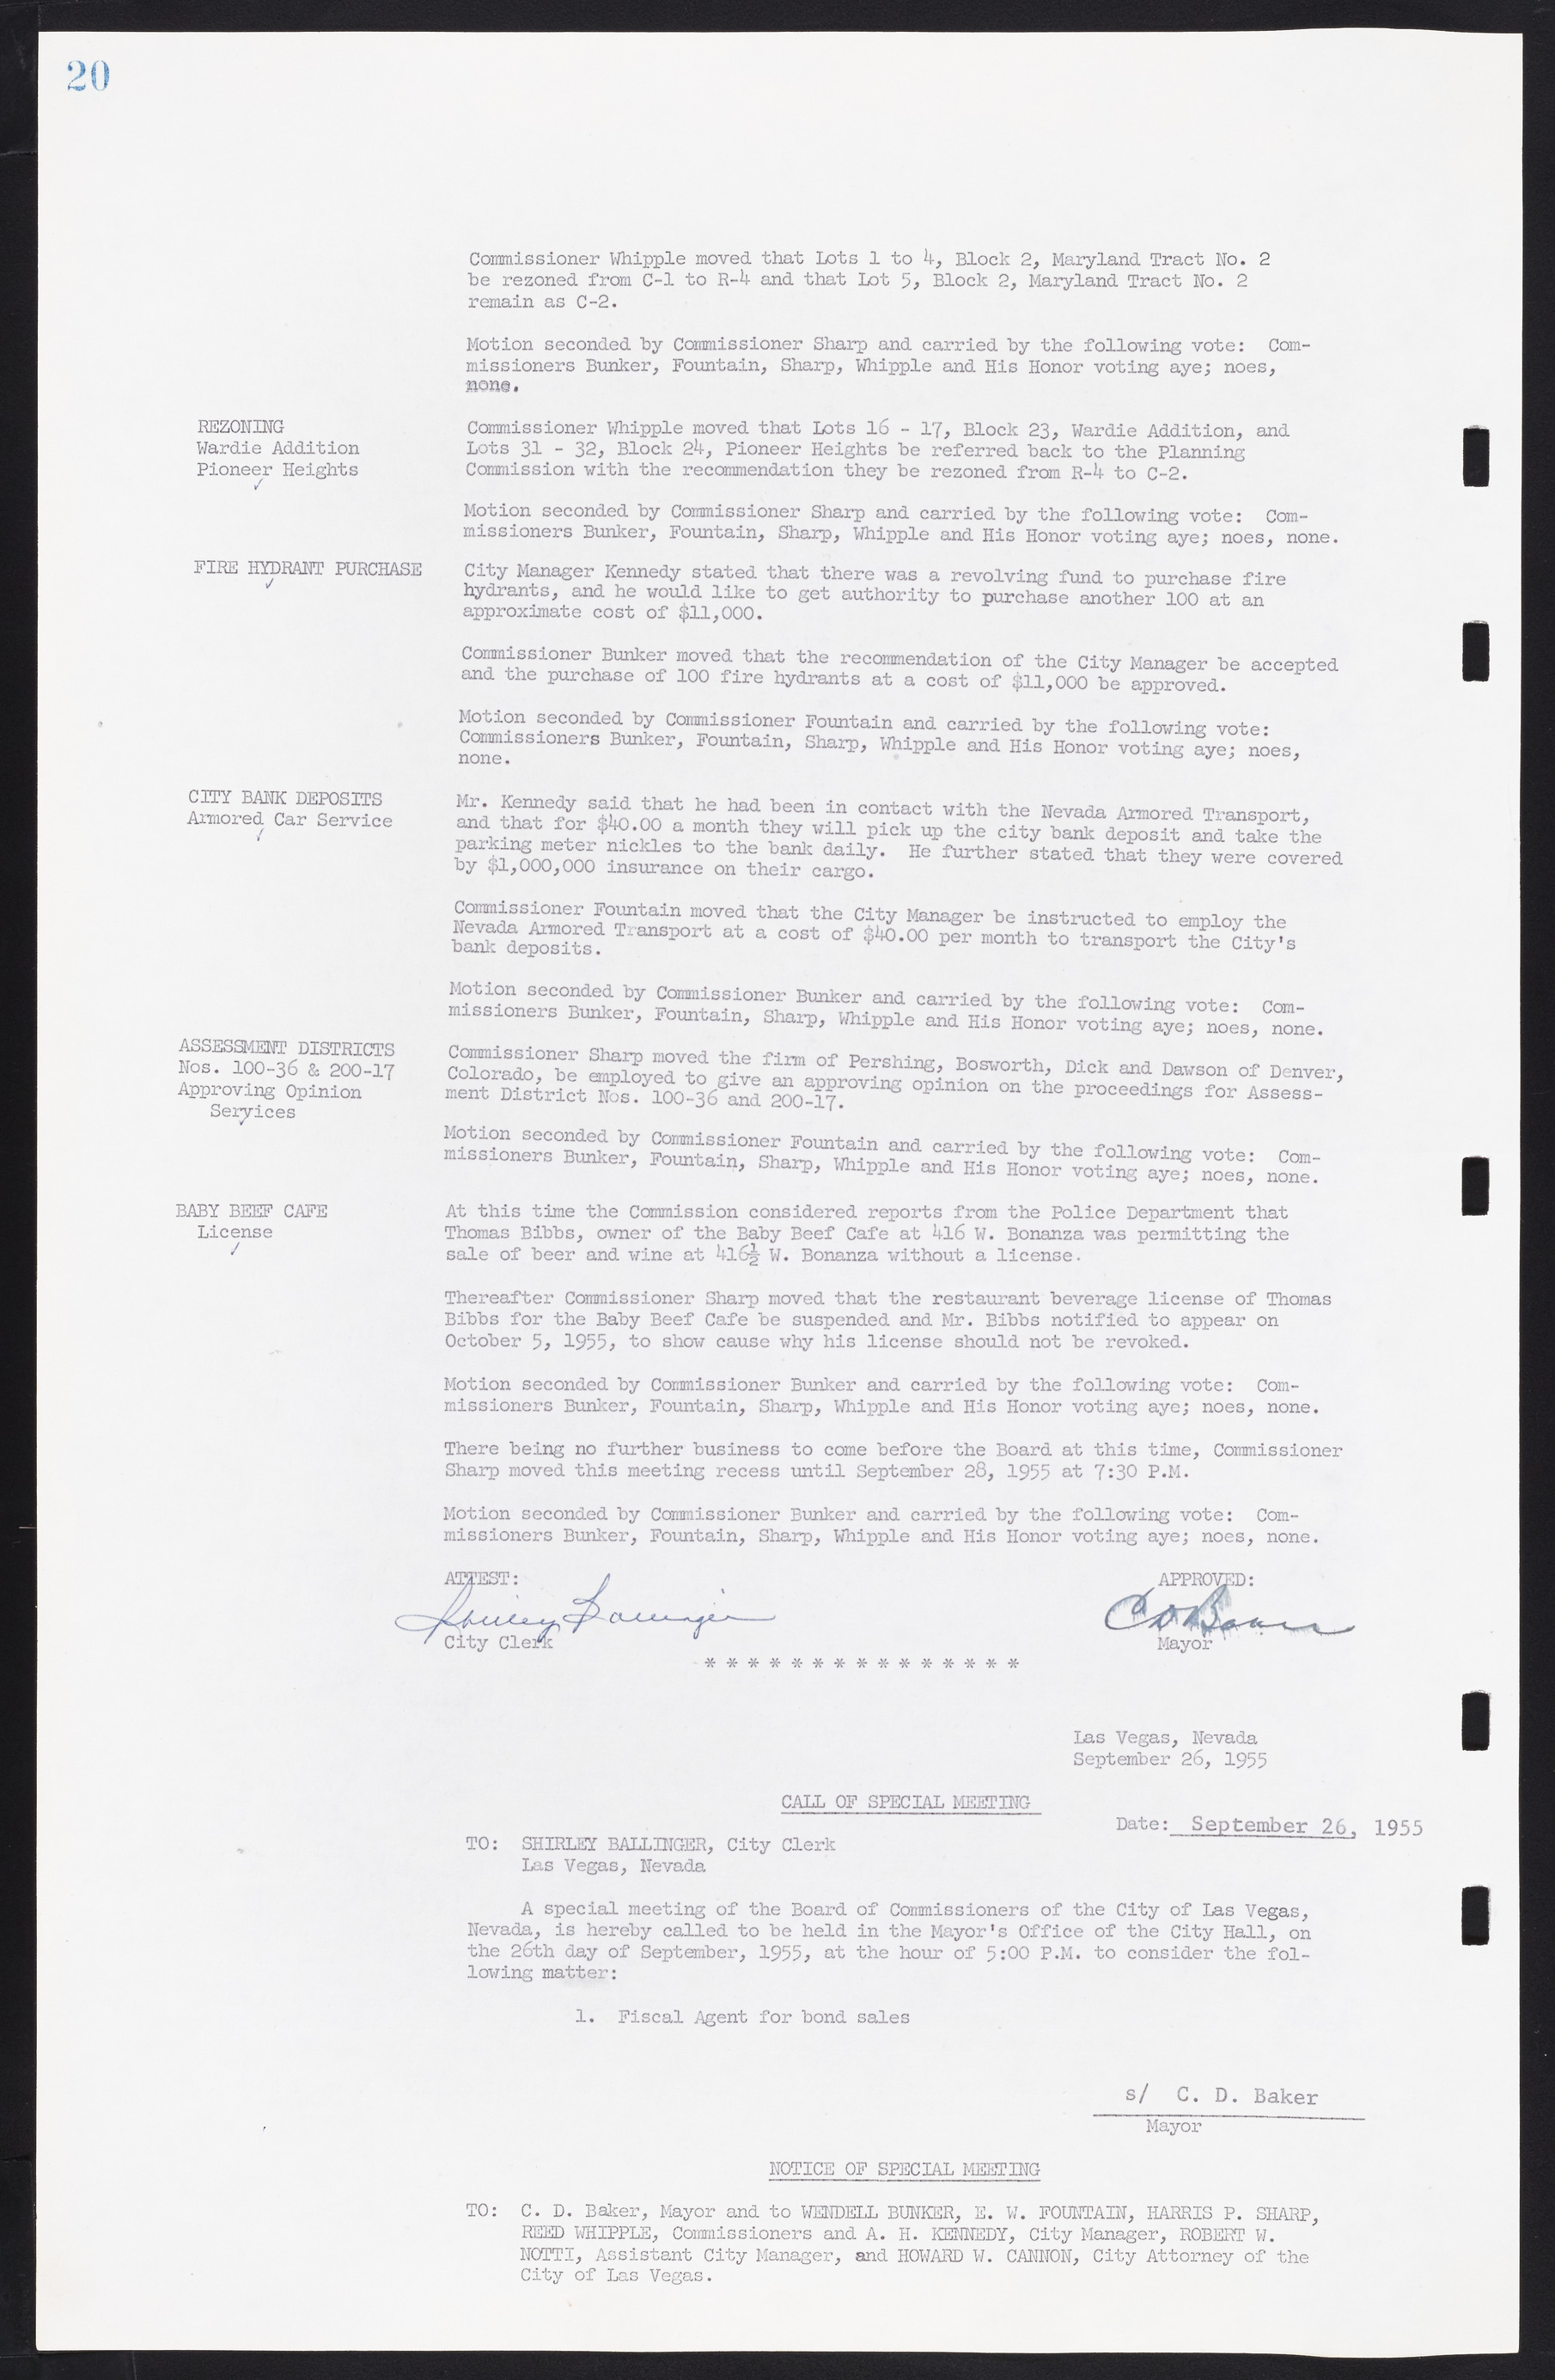 Las Vegas City Commission Minutes, September 21, 1955 to November 20, 1957, lvc000010-26